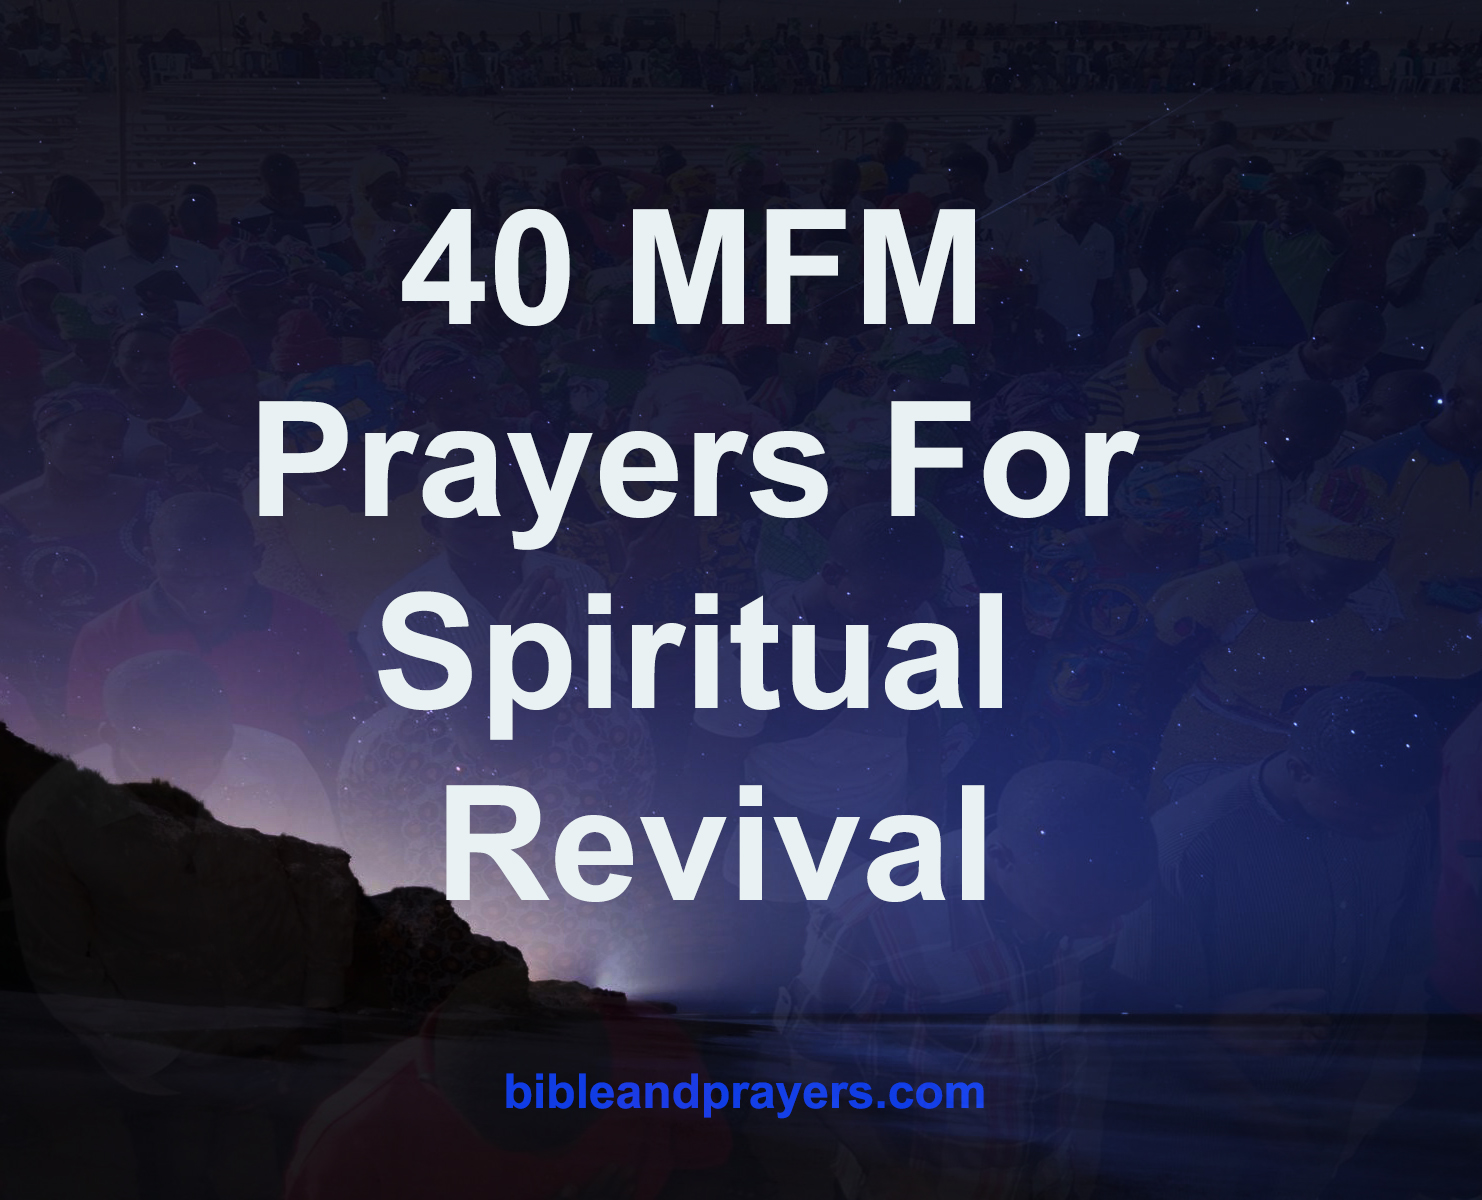 MFM Prayers For Spiritual Revival